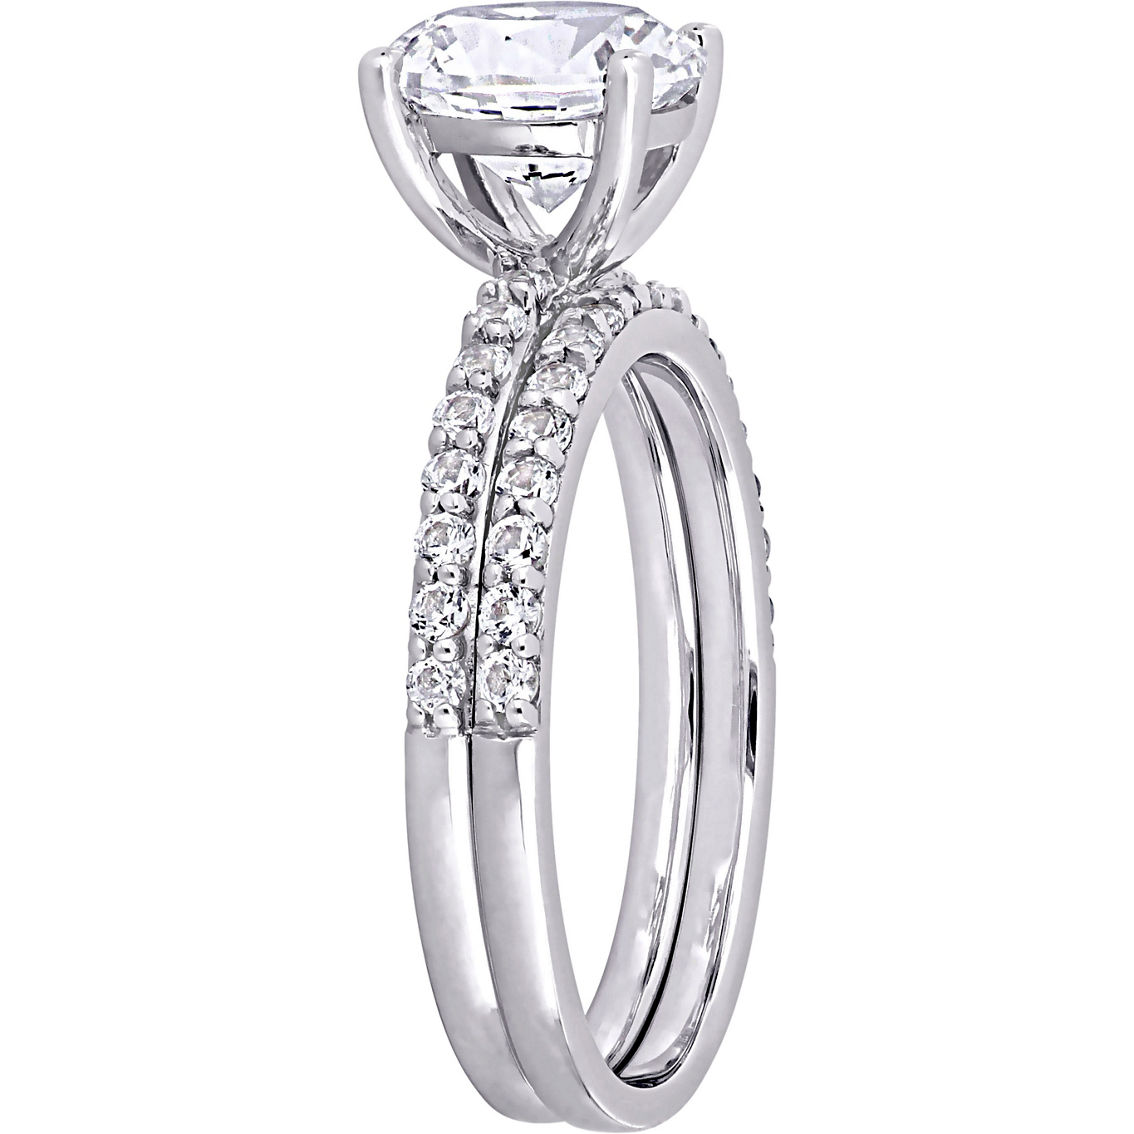 Sofia B. 10K White Gold 3 1/10 CTW Created White Sapphire Bridal Ring Set - Image 2 of 6